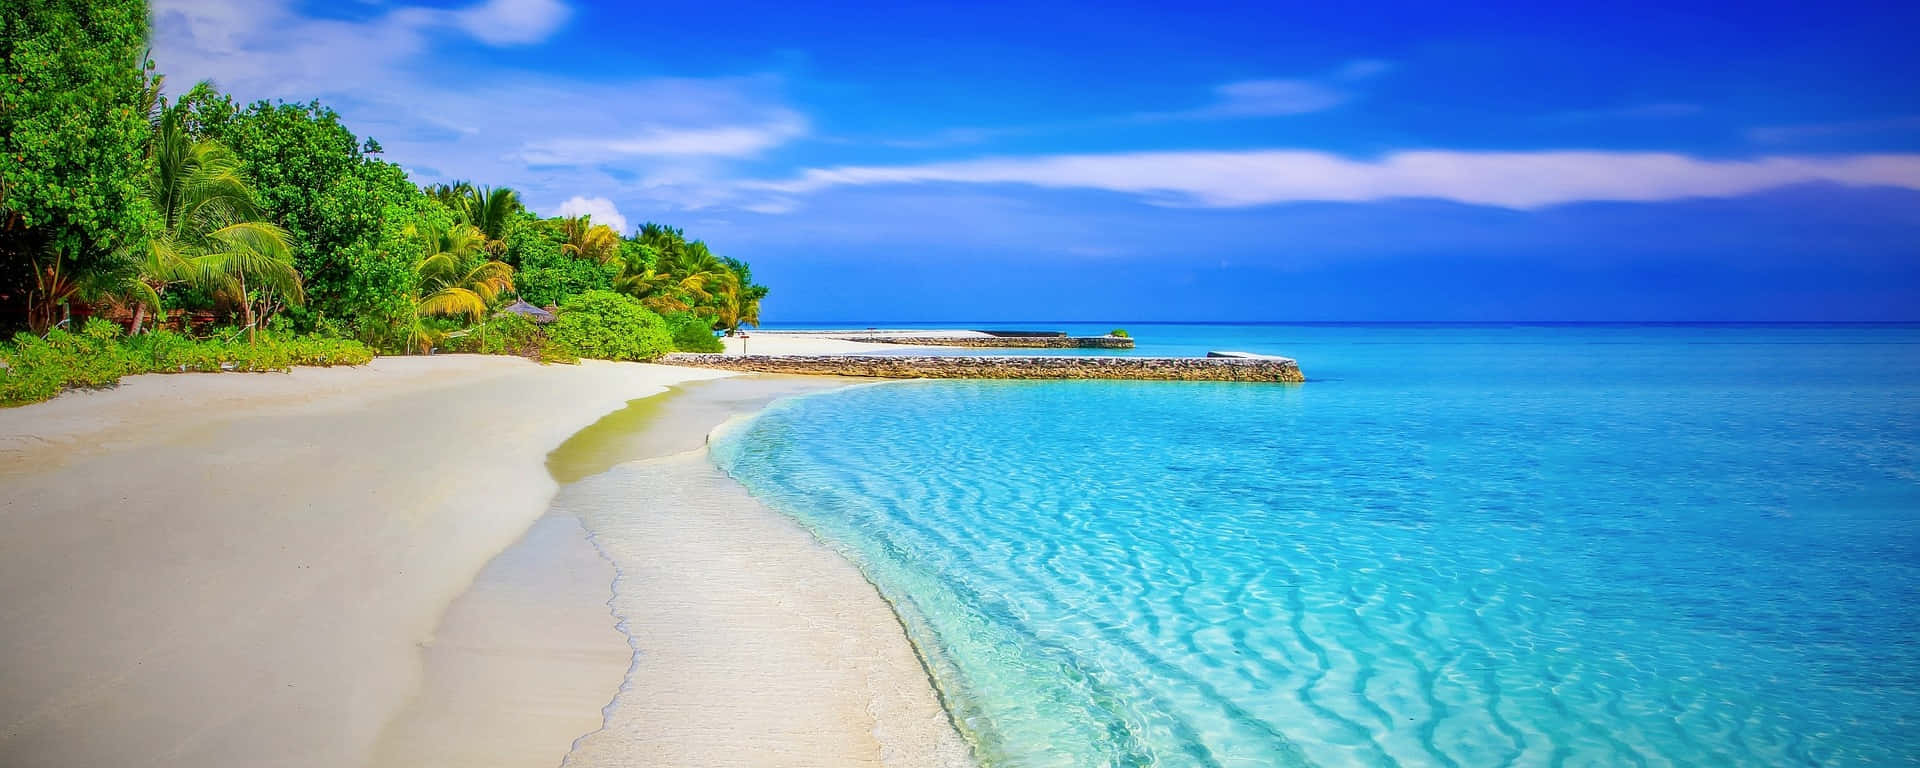 Blue Ocean Beach Panoramic Picture